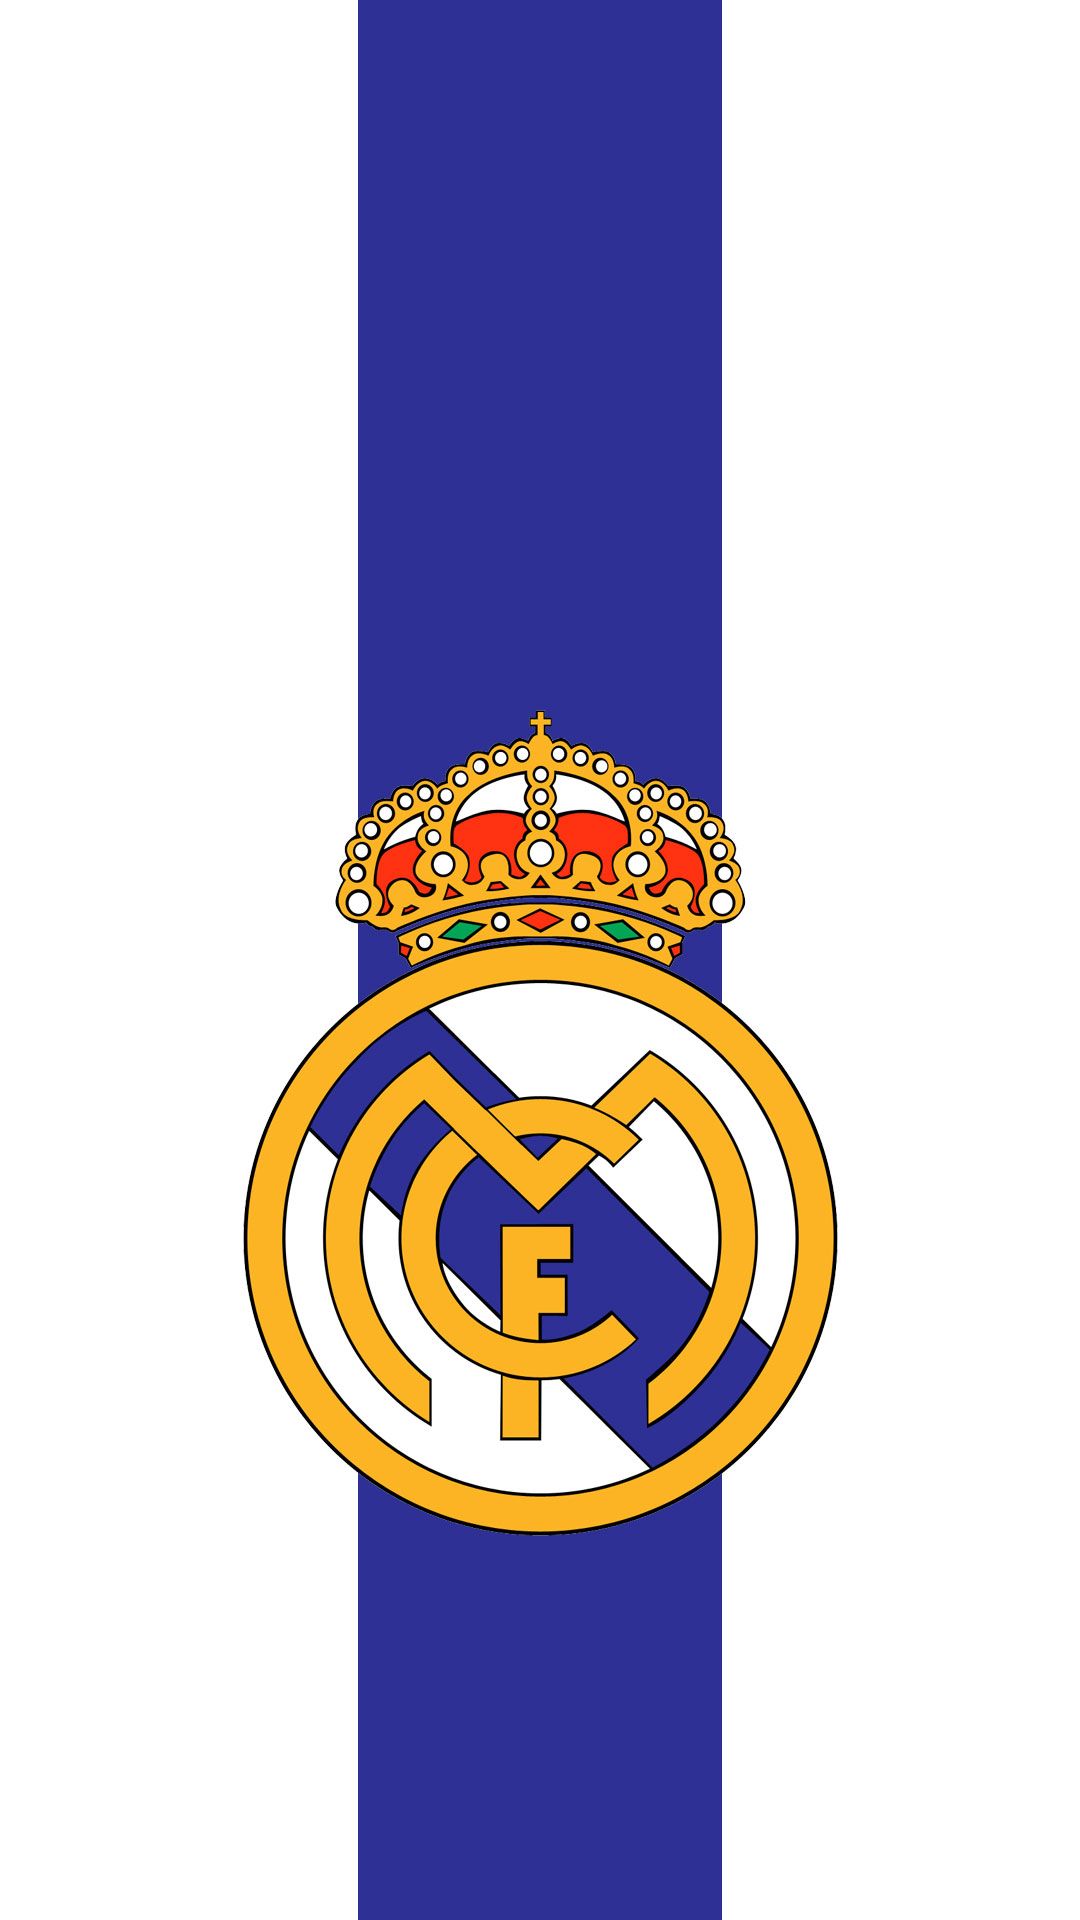 Real Madrid Lockscreen Wallpaper 1080 x 1920 : realmadrid